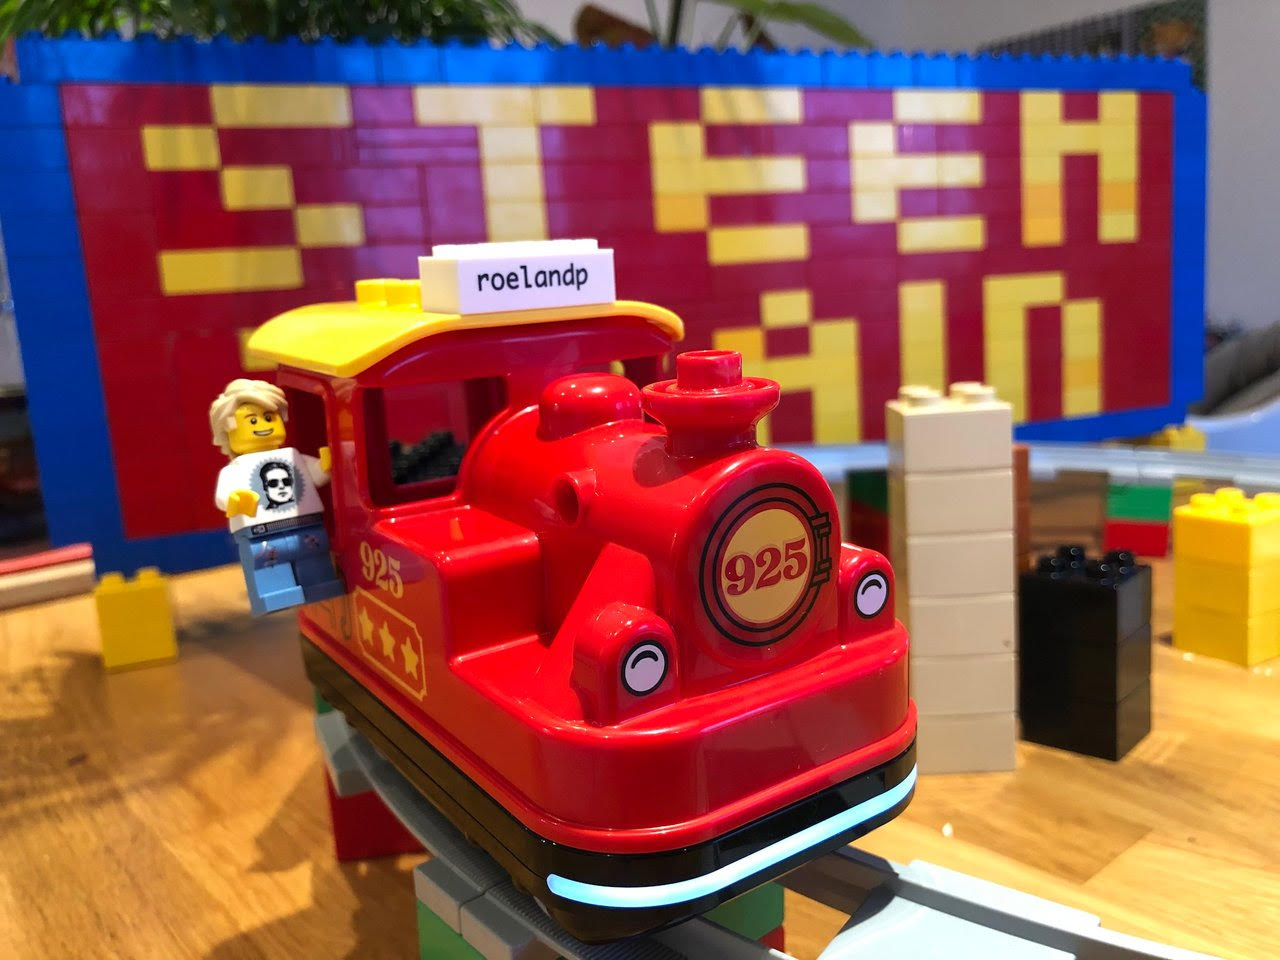 røg bh hav det sjovt Dutch hacker puts his kid's LEGO train on the blockchain